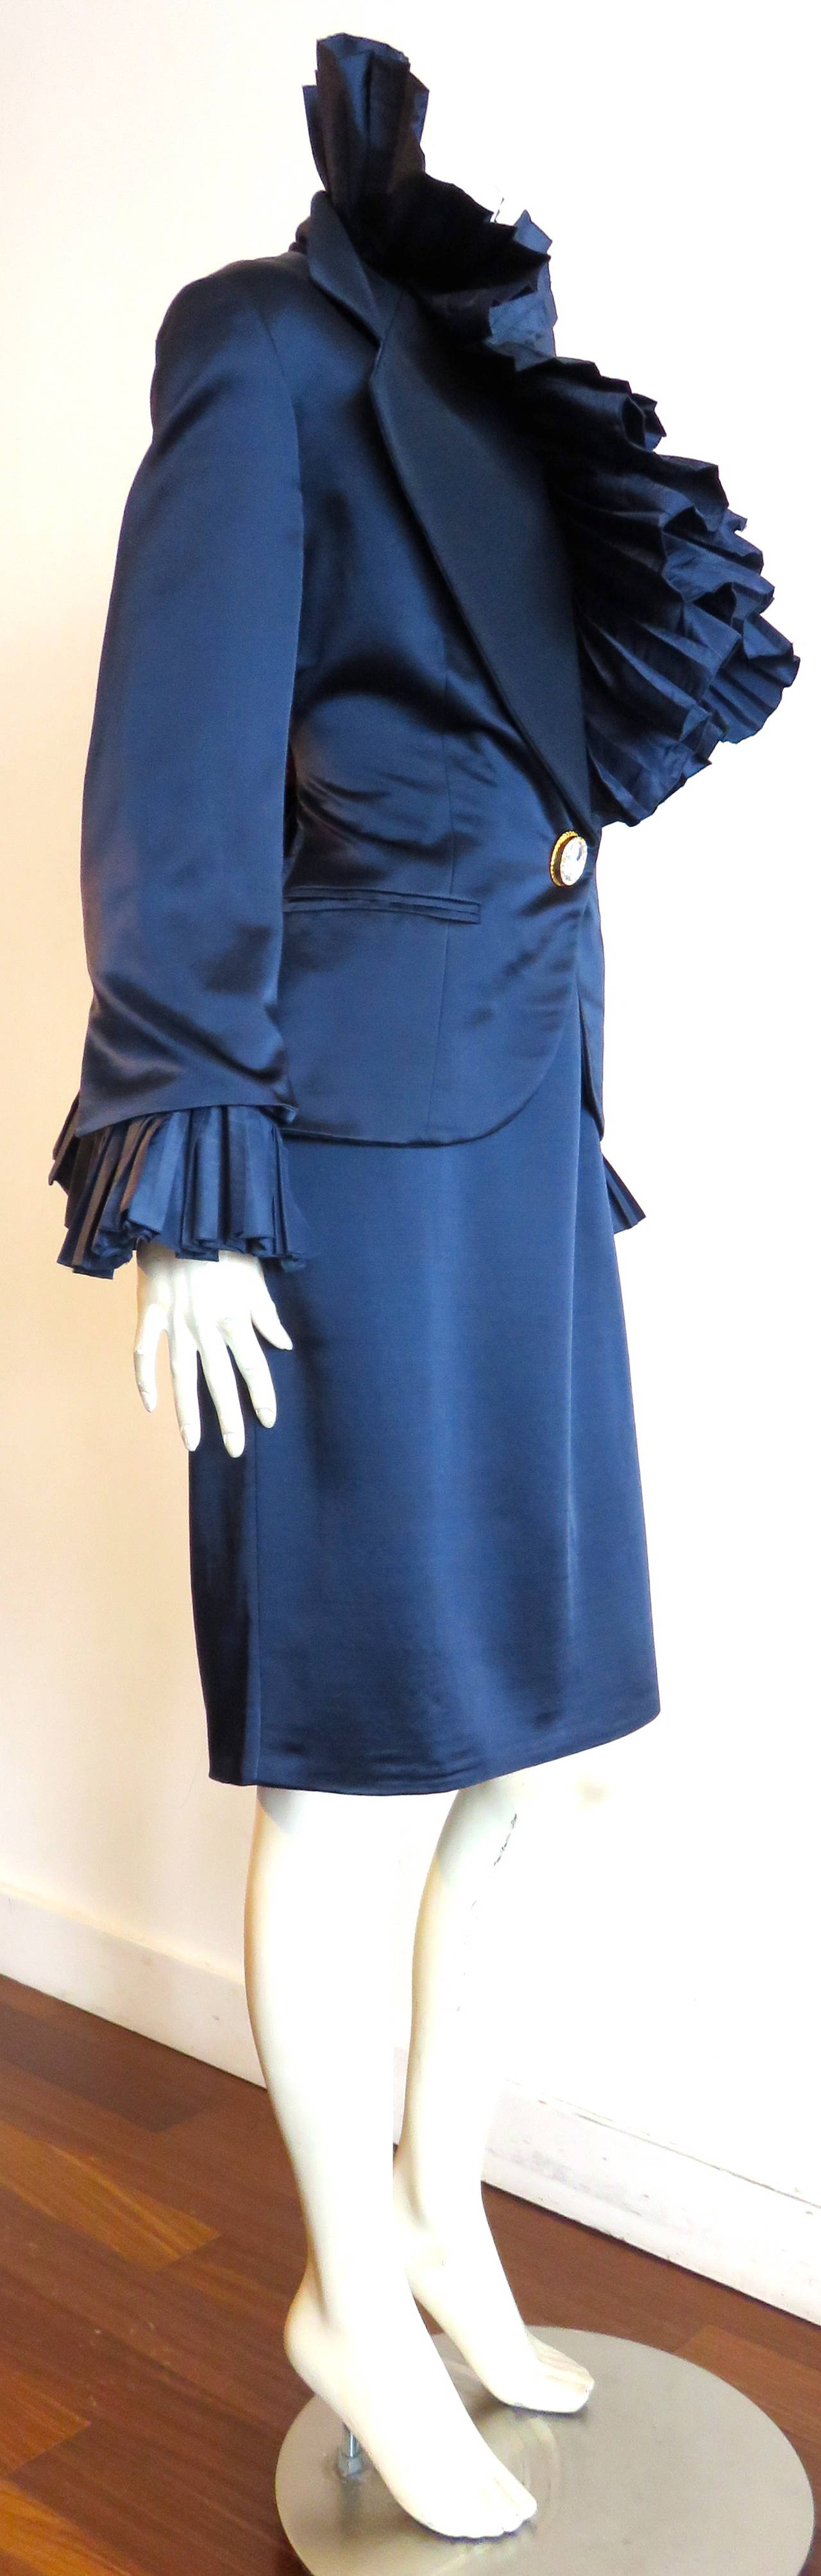 Women's CHRISTIAN DIOR by Gianfranco Ferré Satin & taffeta skirt suit